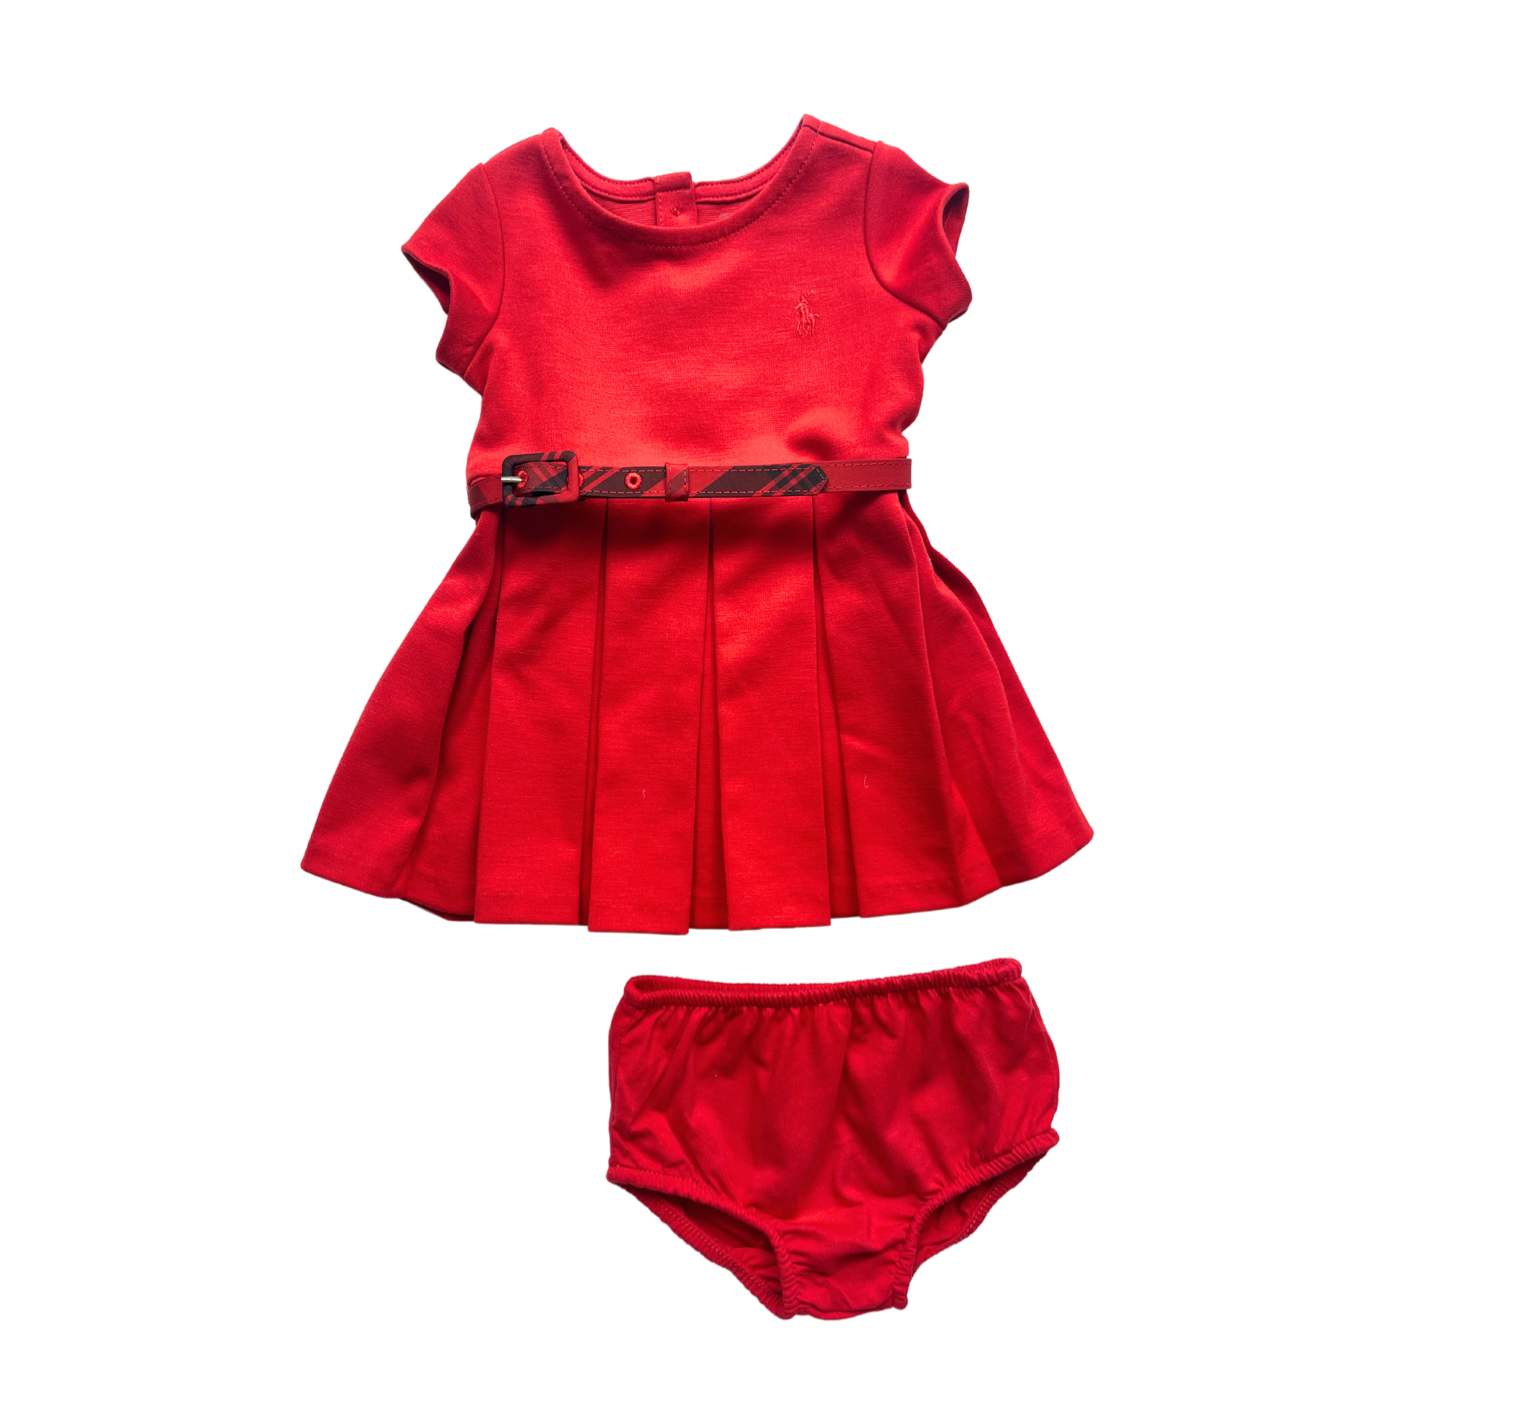 RALPH LAUREN - Ensemble robe et bloomer rouges - 6 mois